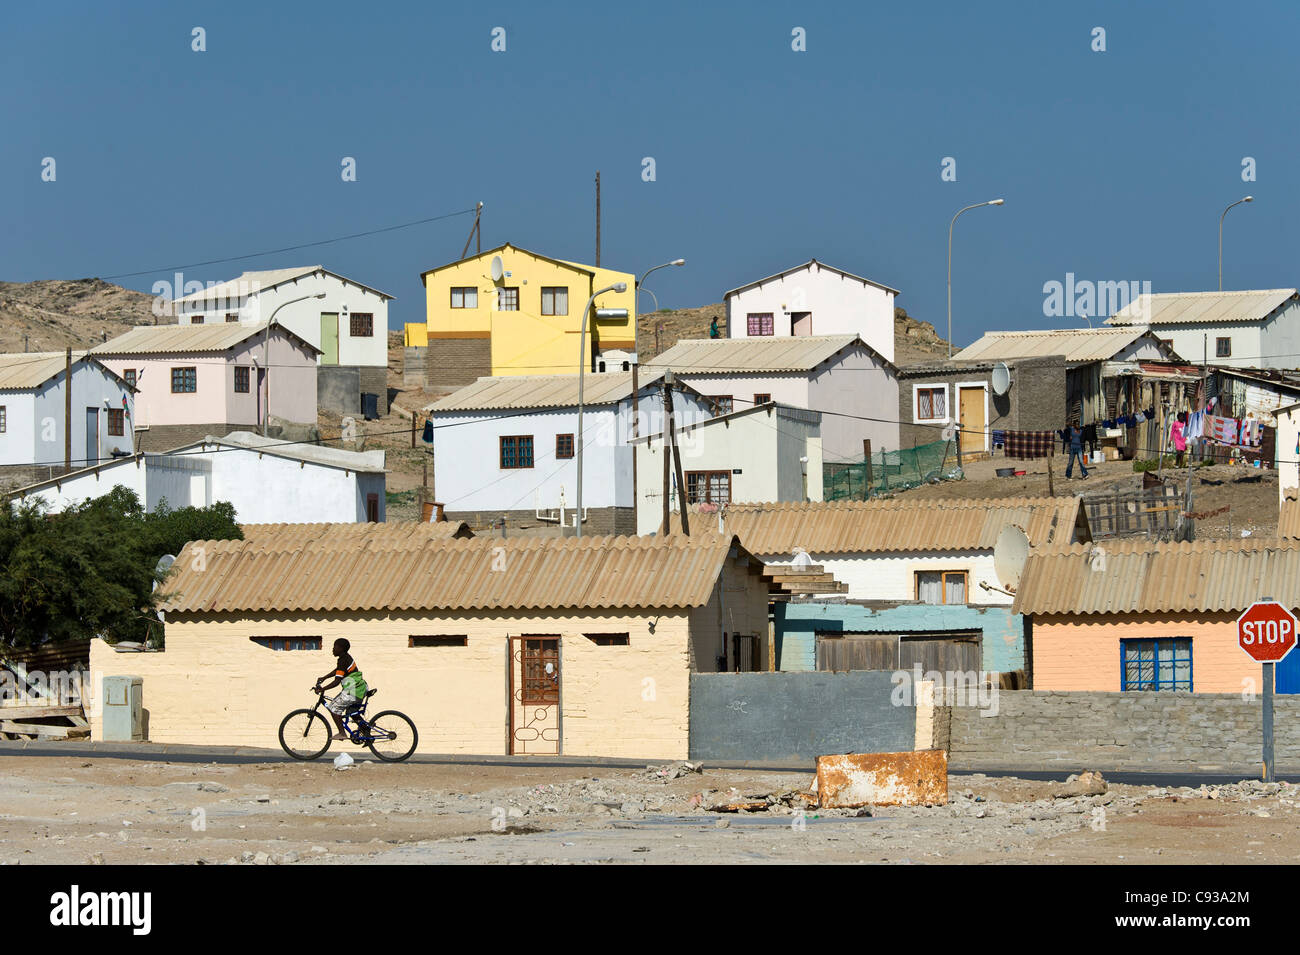 New housing area on the outskirts of Luederitz Namibia Stock Photo